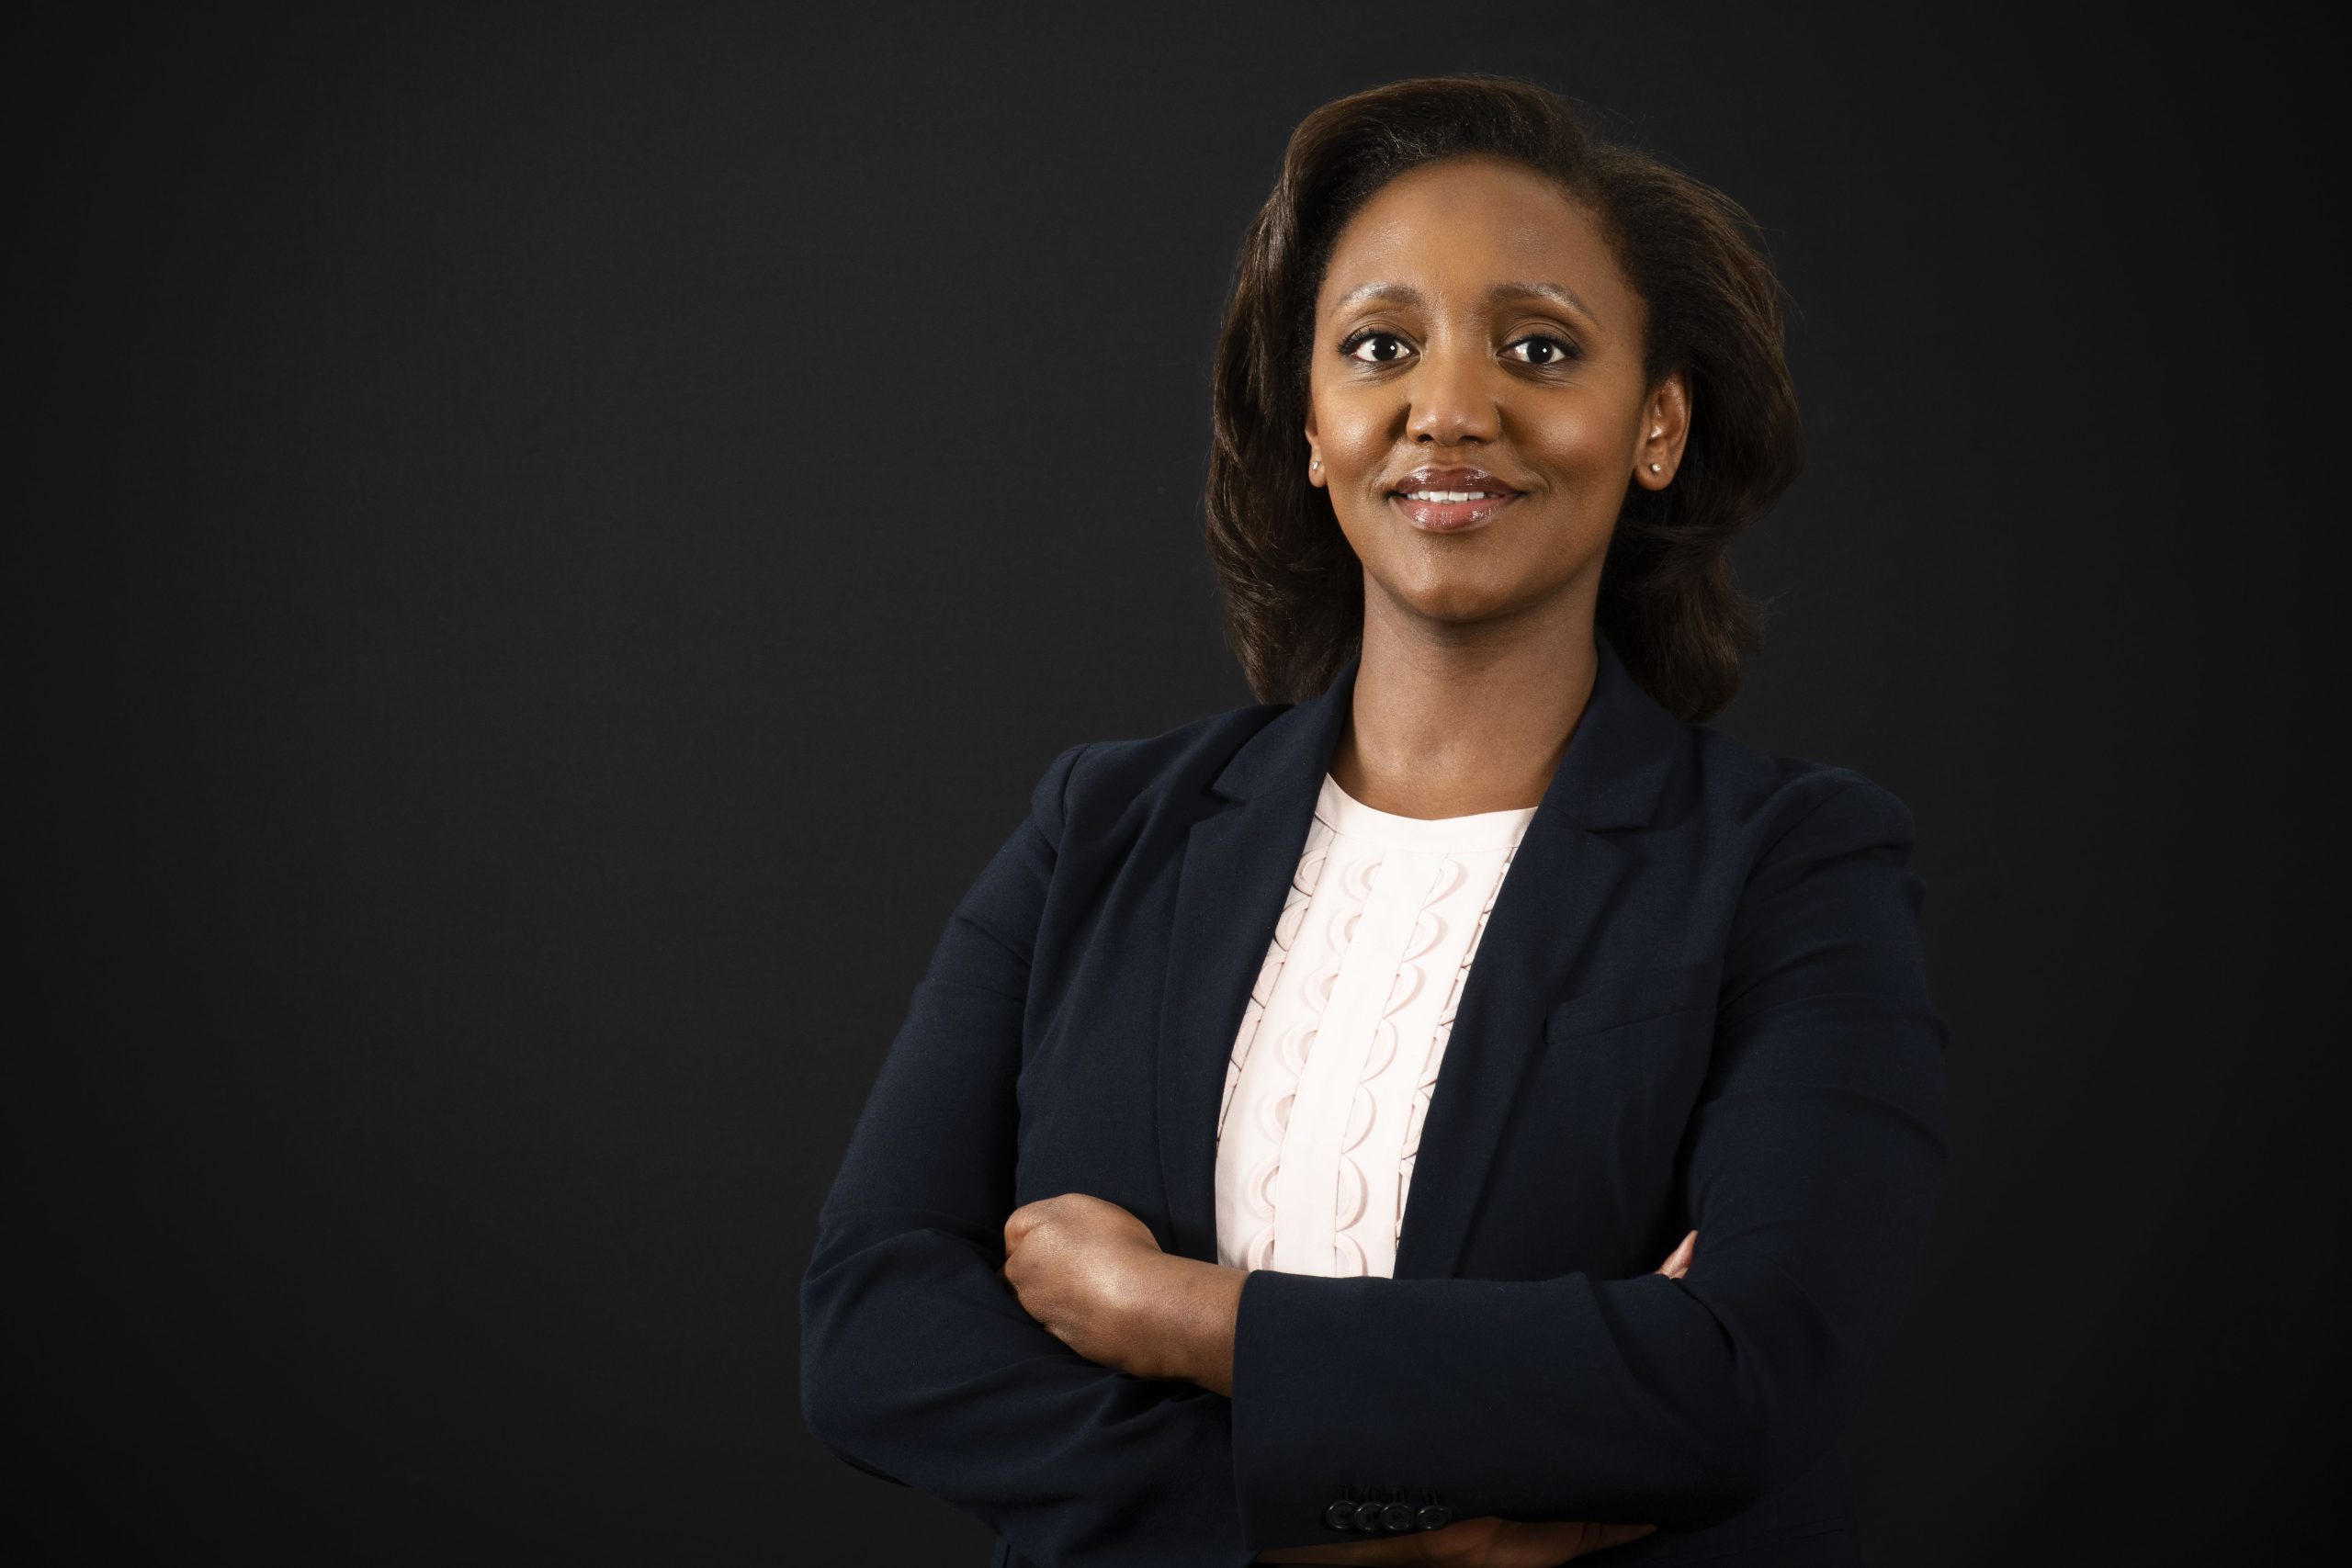 RwandAir CEO Yvonne MAKOLO